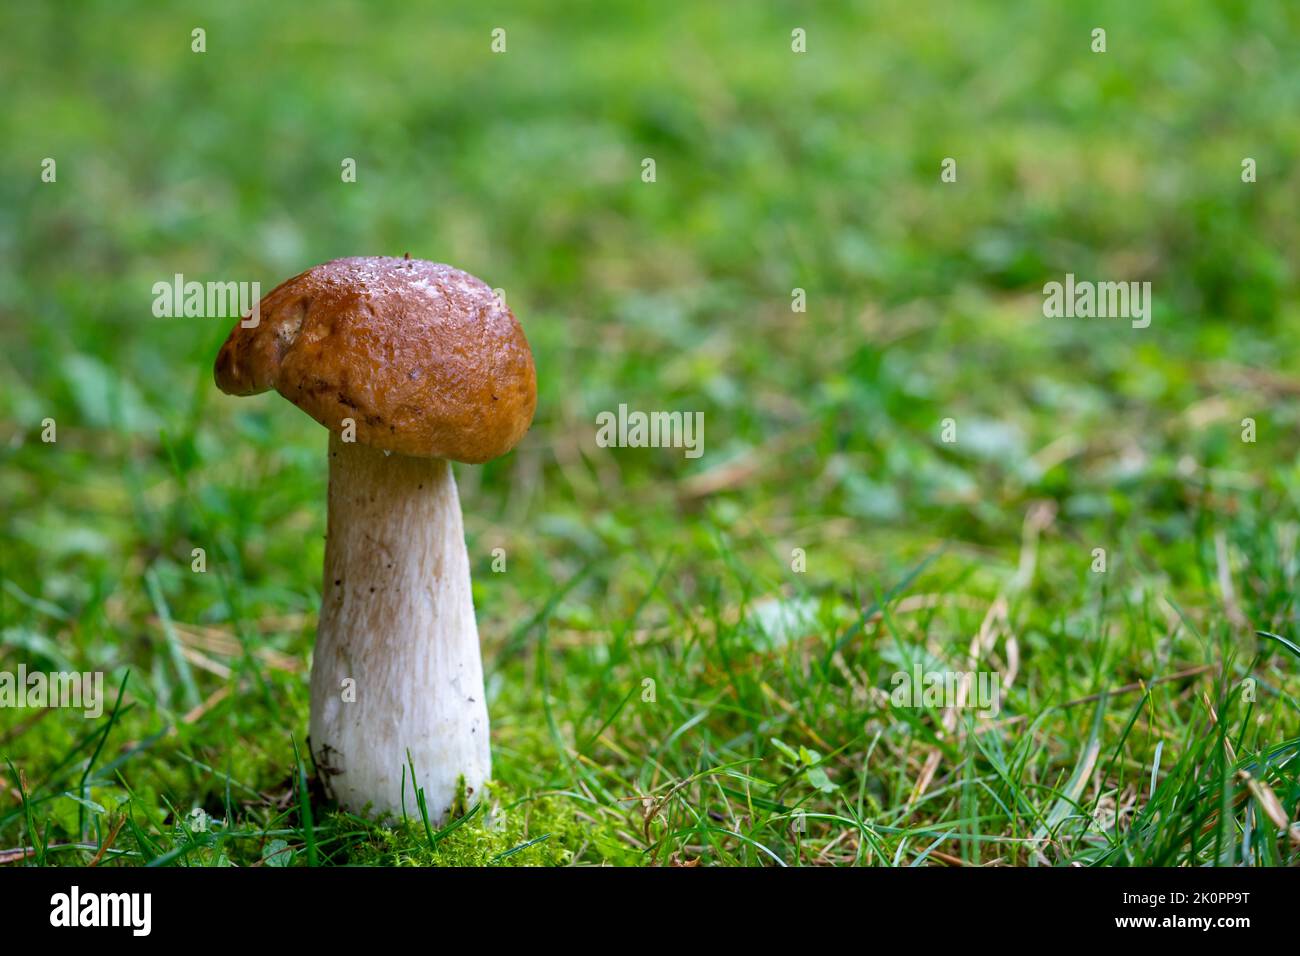 Porcini mushroom isolated on a meadow Stock Photo